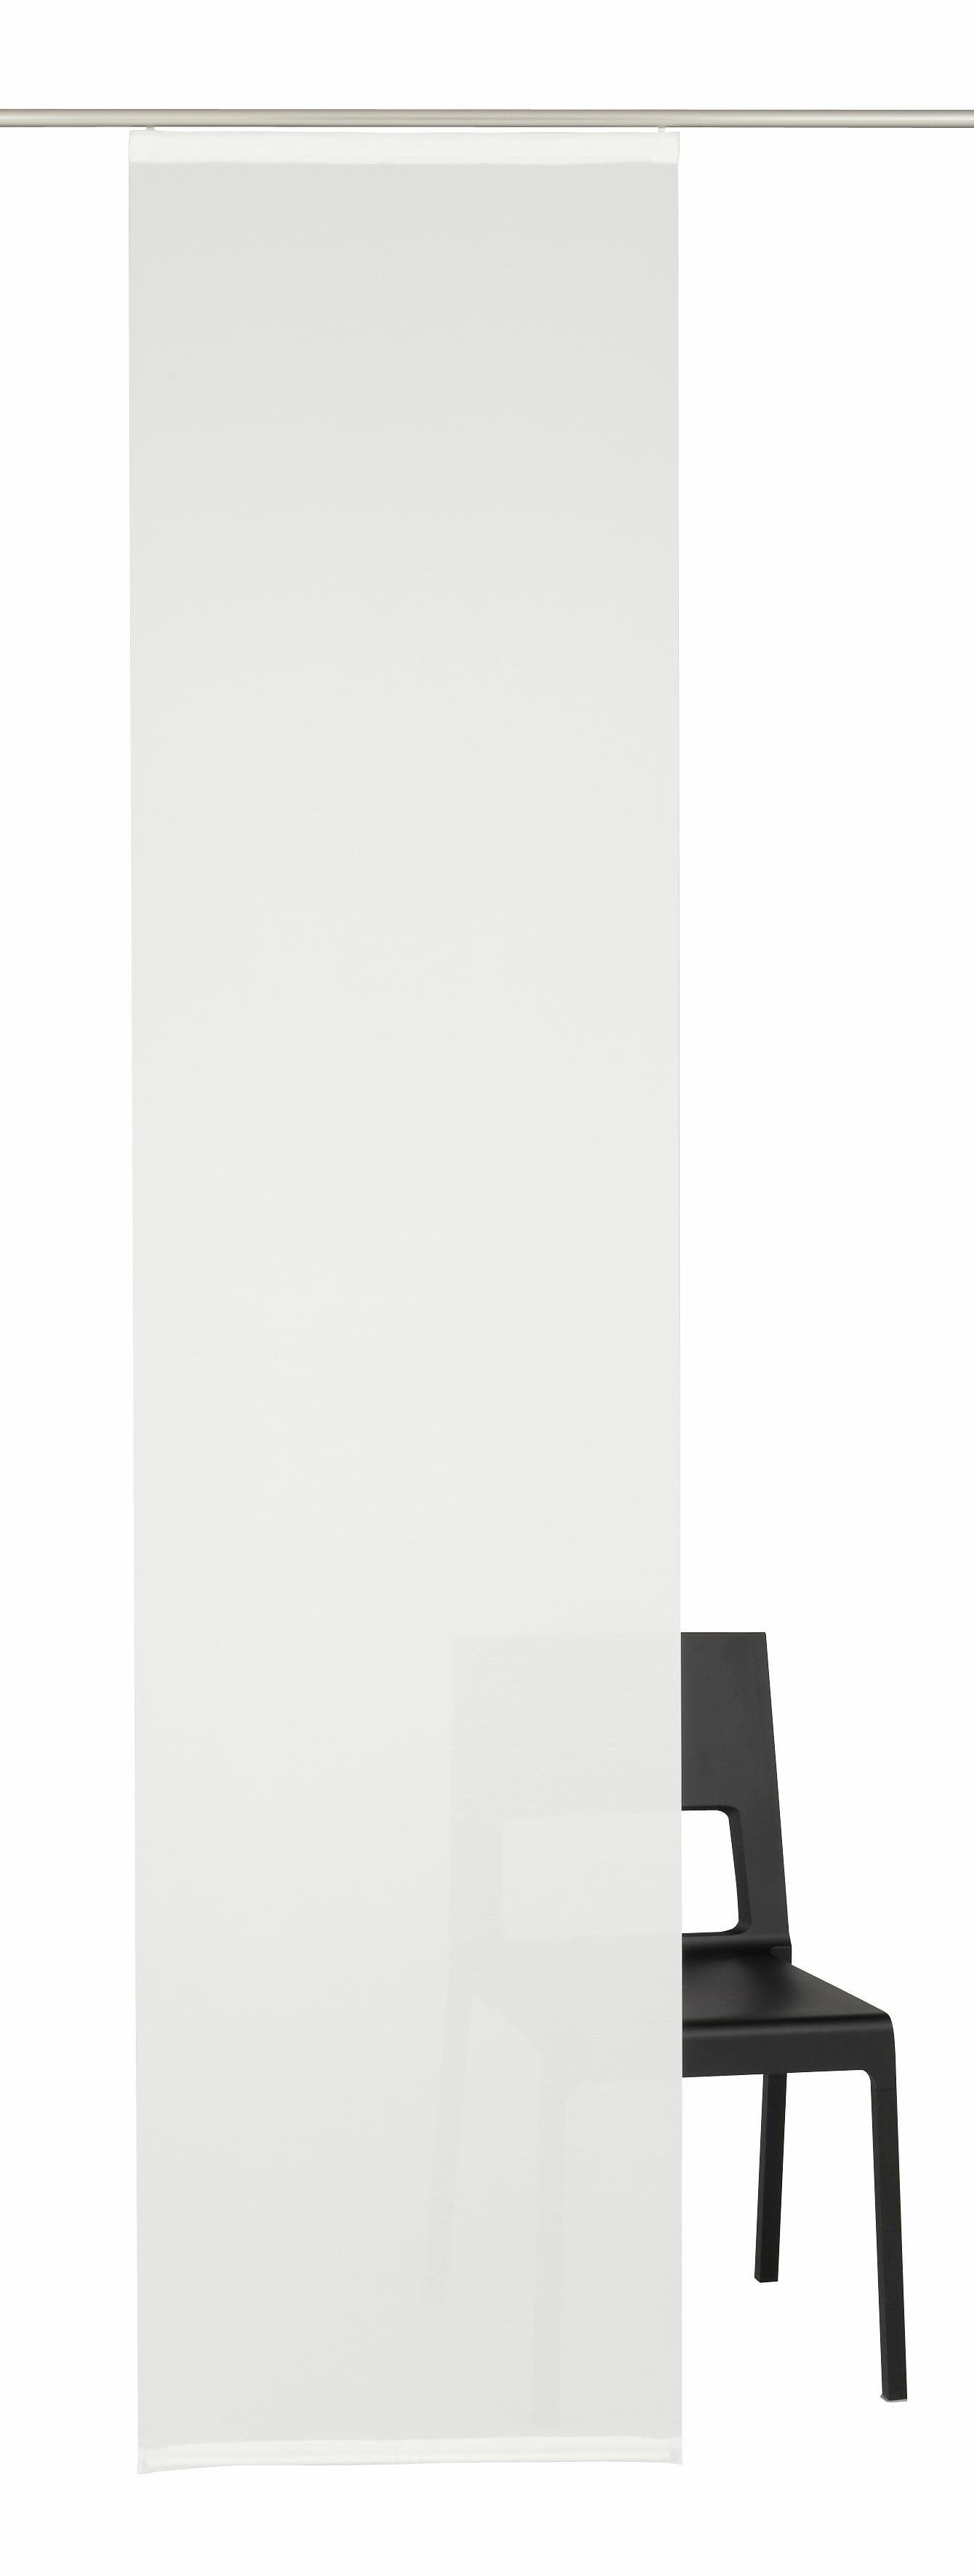 Neutex for you! Paneelgordijn Galena uni inclusief bevestigingsmateriaal, breedte: 57 cm (1 stuk)